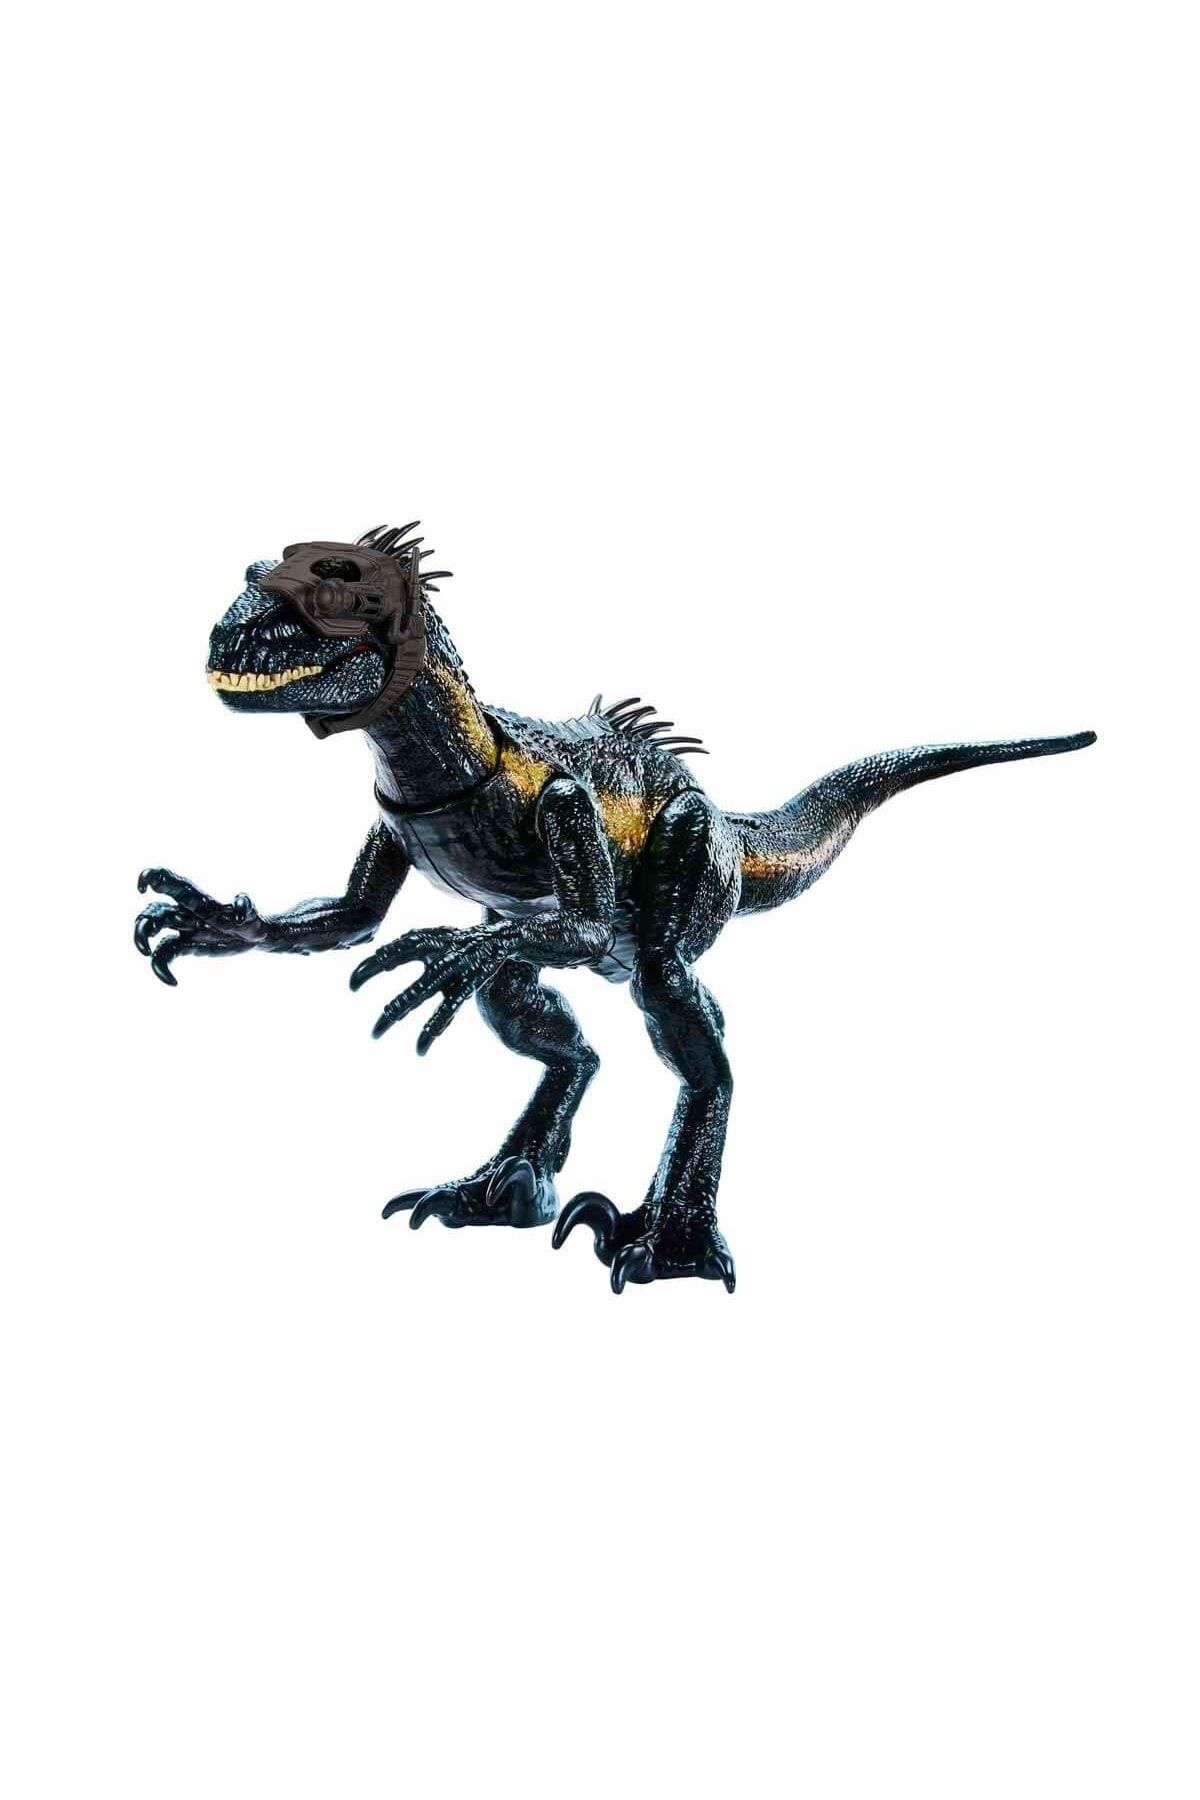 Jurassic World Hky11 Jurassic World Tehlikeli Takip Dinozor Figürü